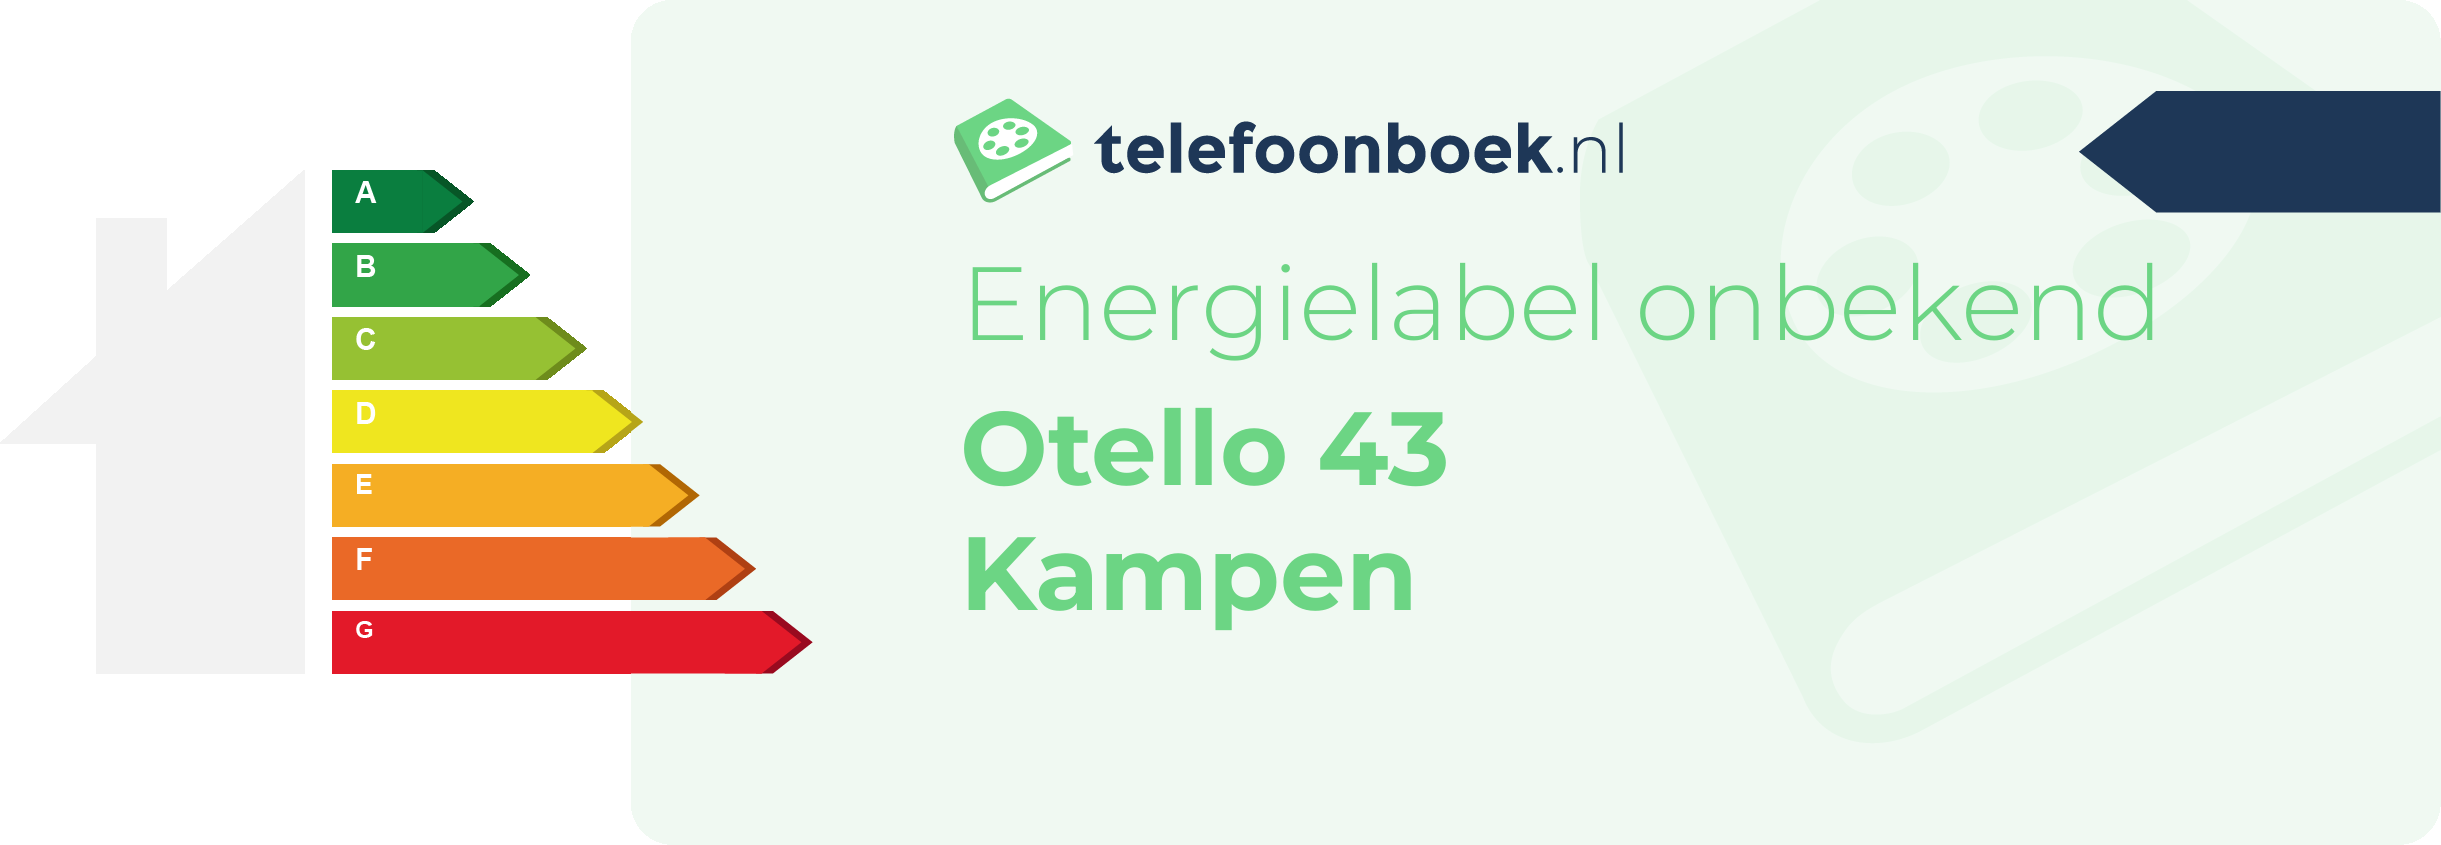 Energielabel Otello 43 Kampen